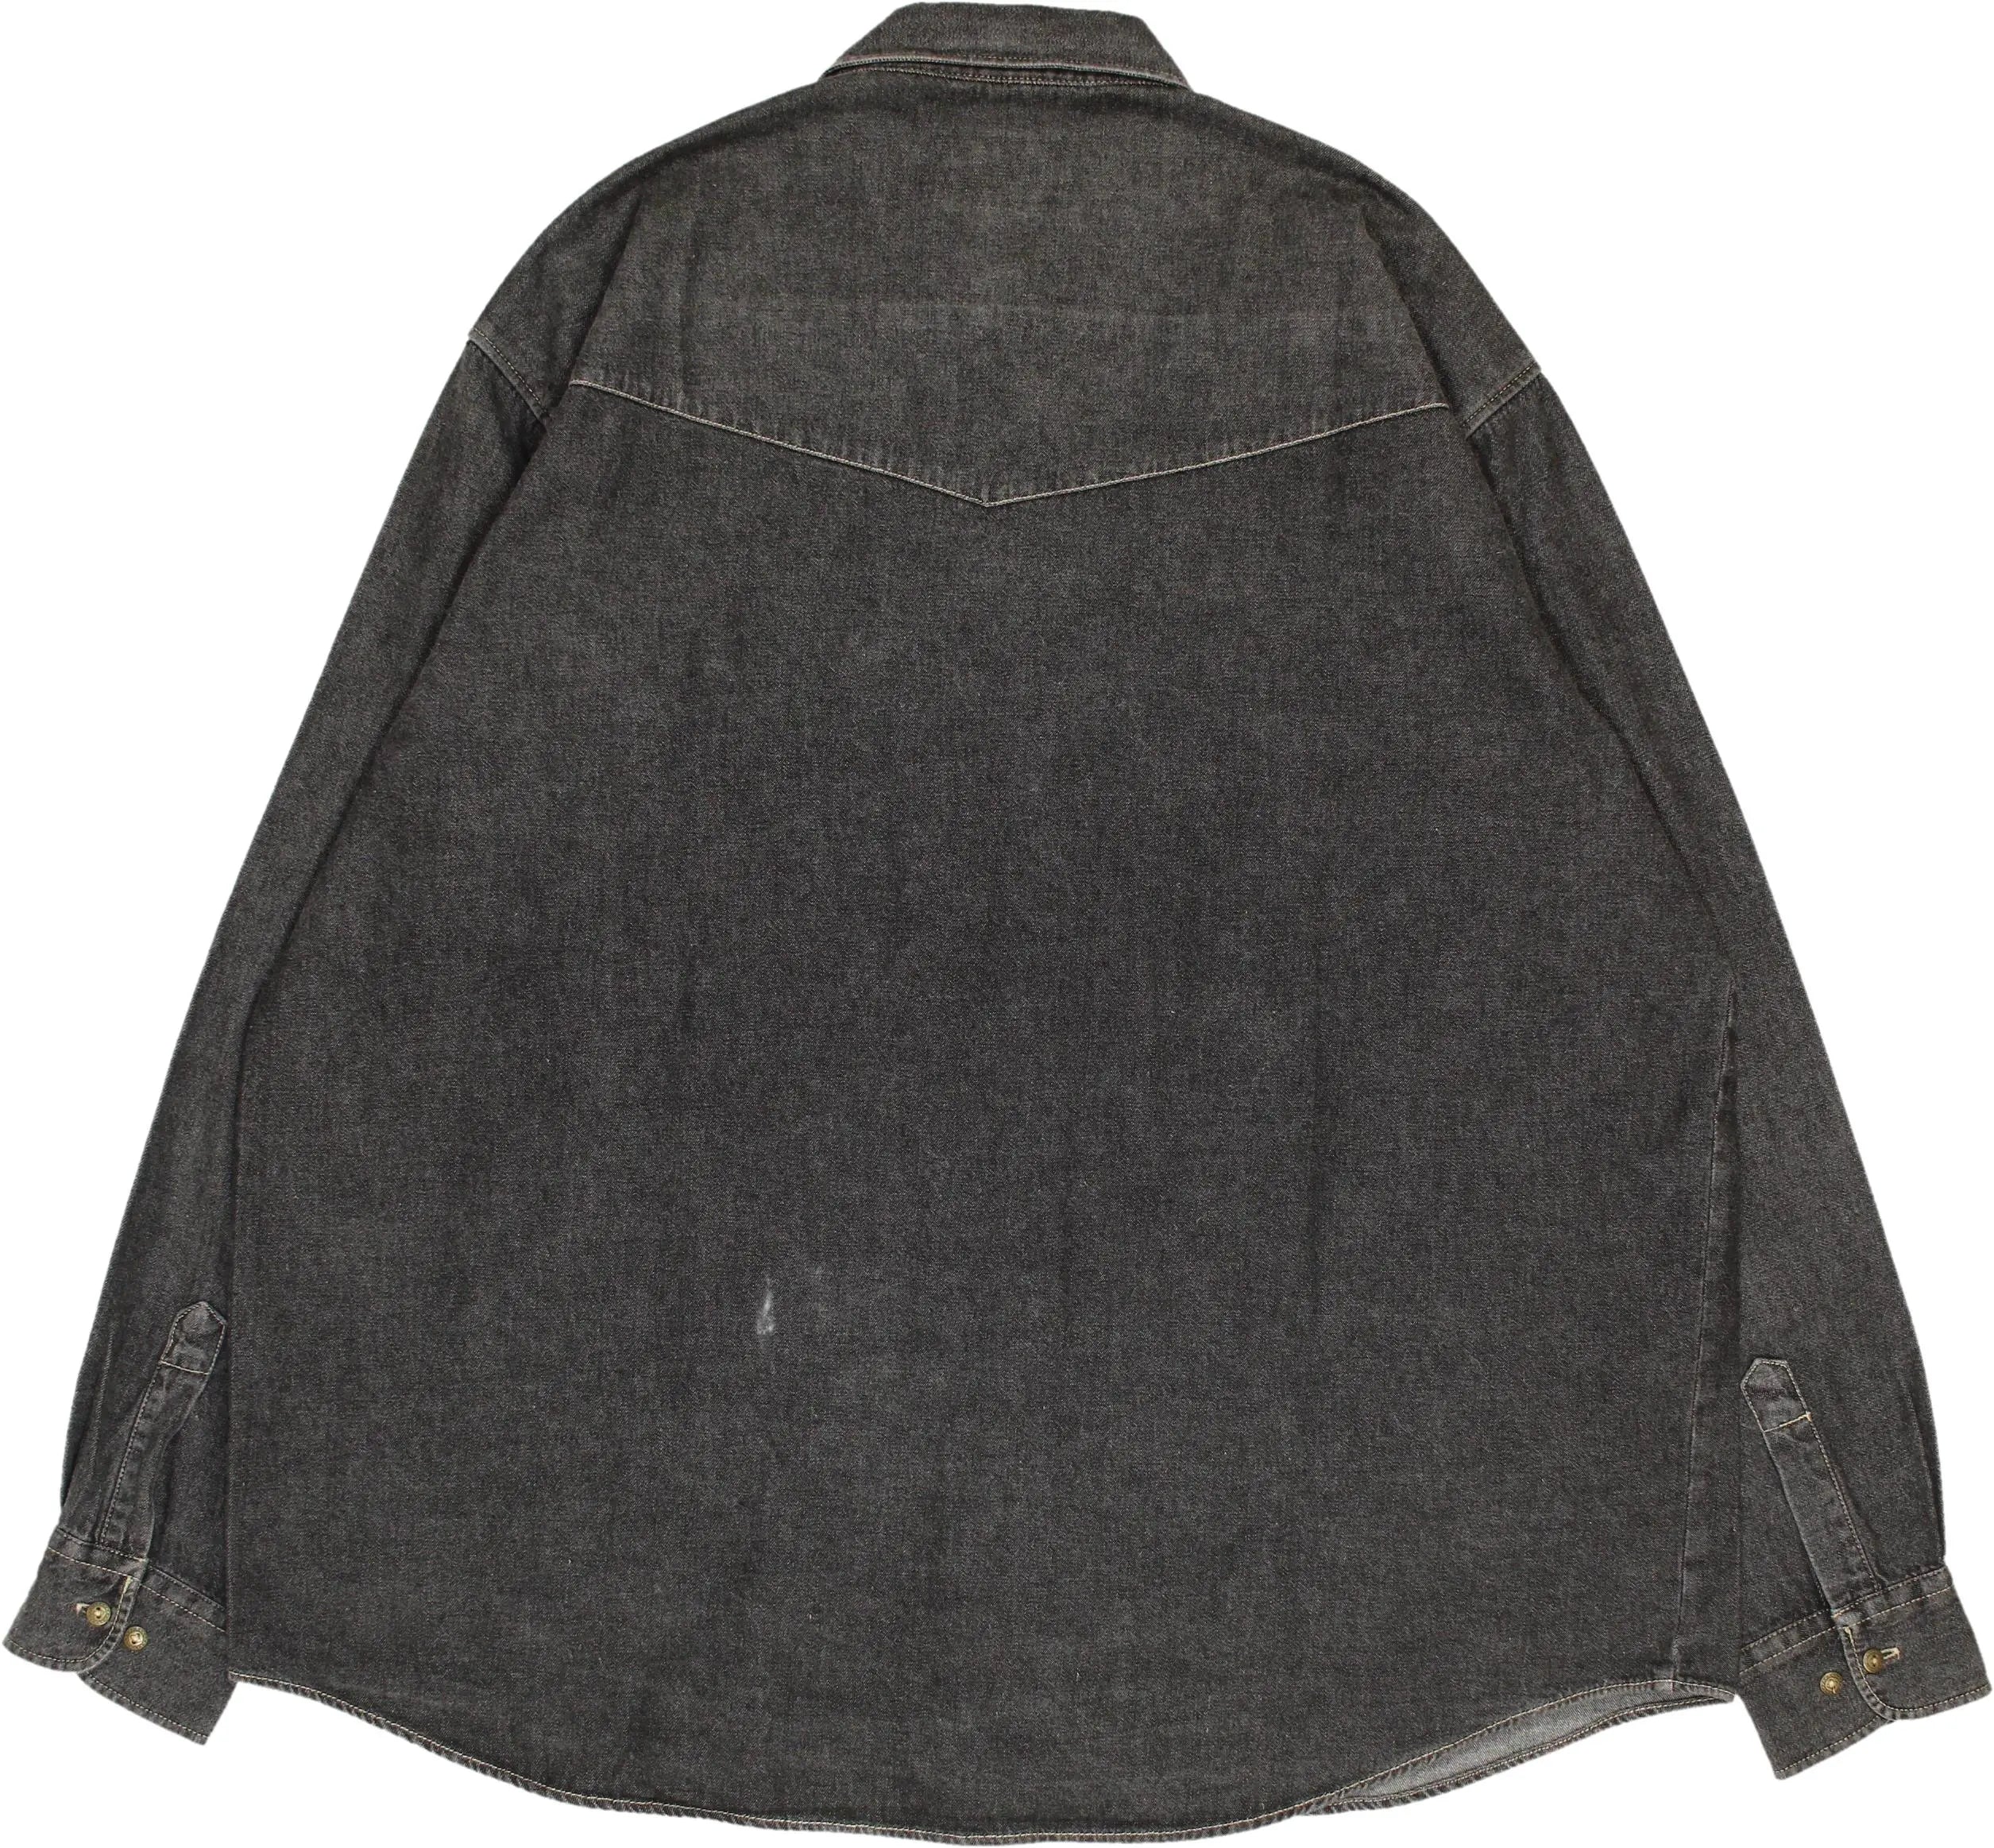 Fashion Affairs - Denim Shirt- ThriftTale.com - Vintage and second handclothing